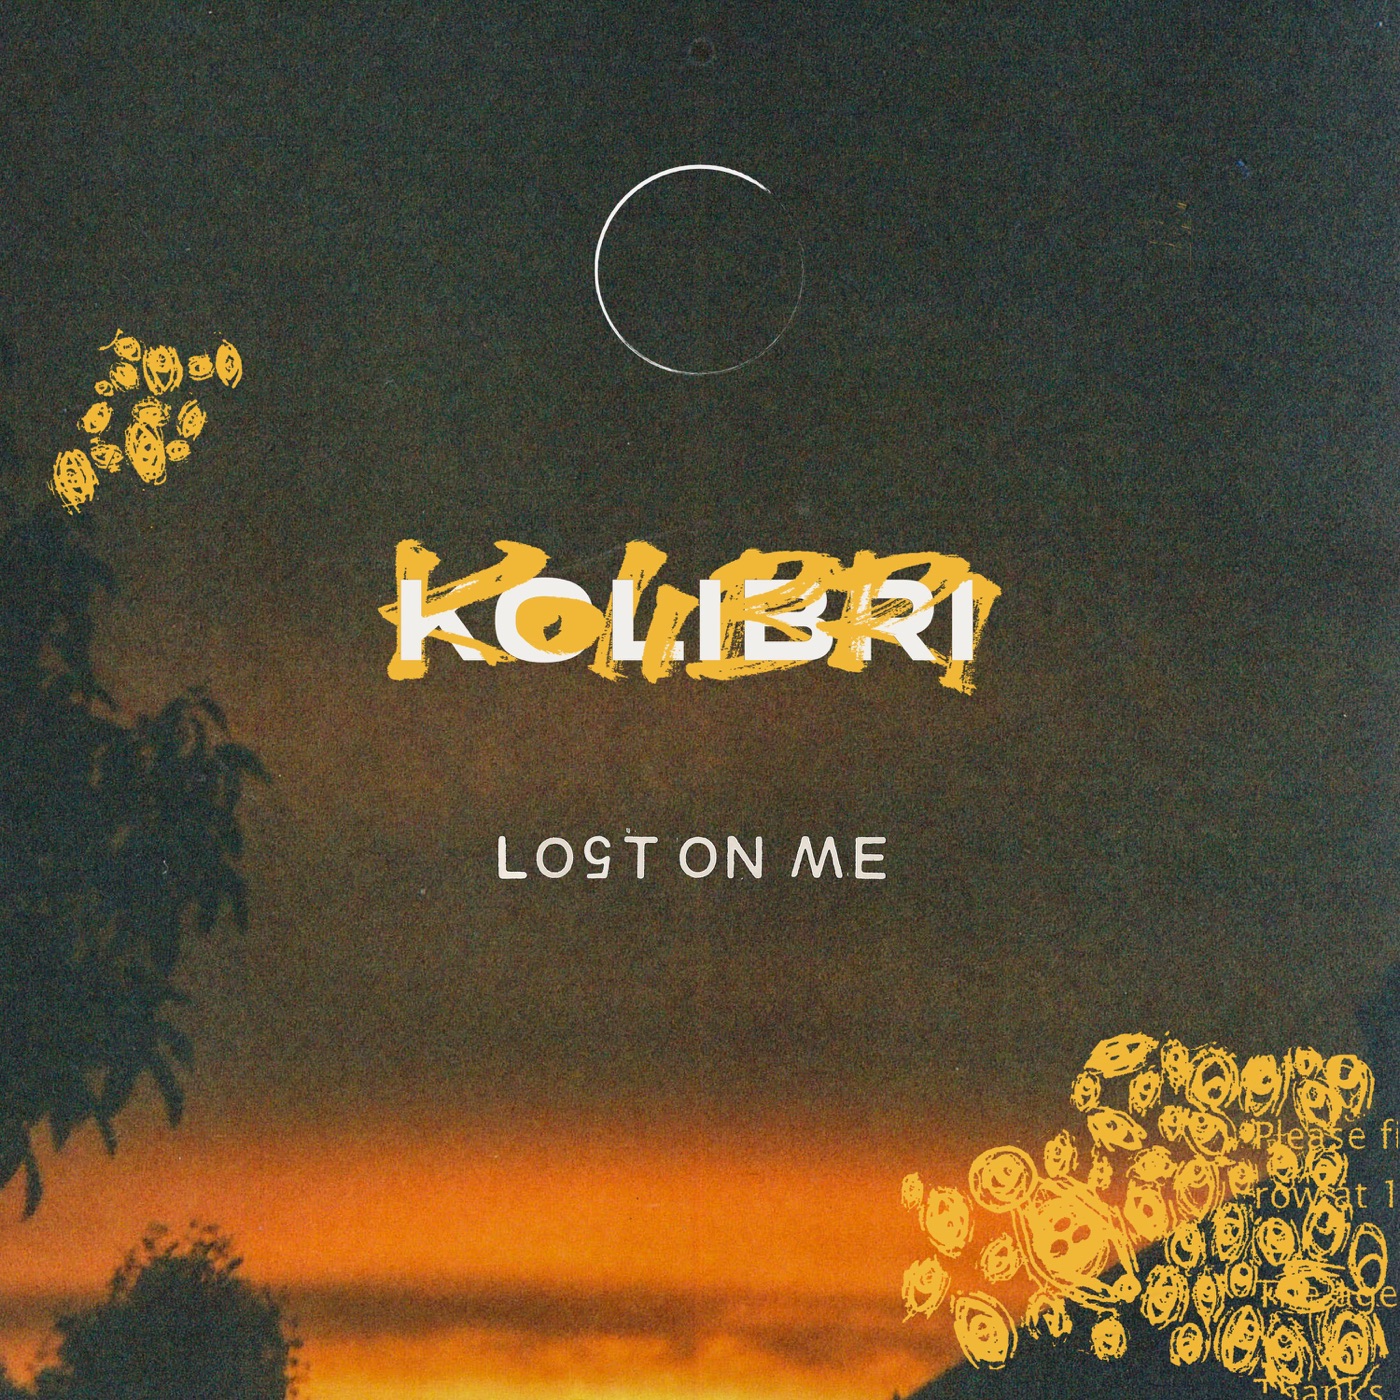 Lost on Me by Kolibri